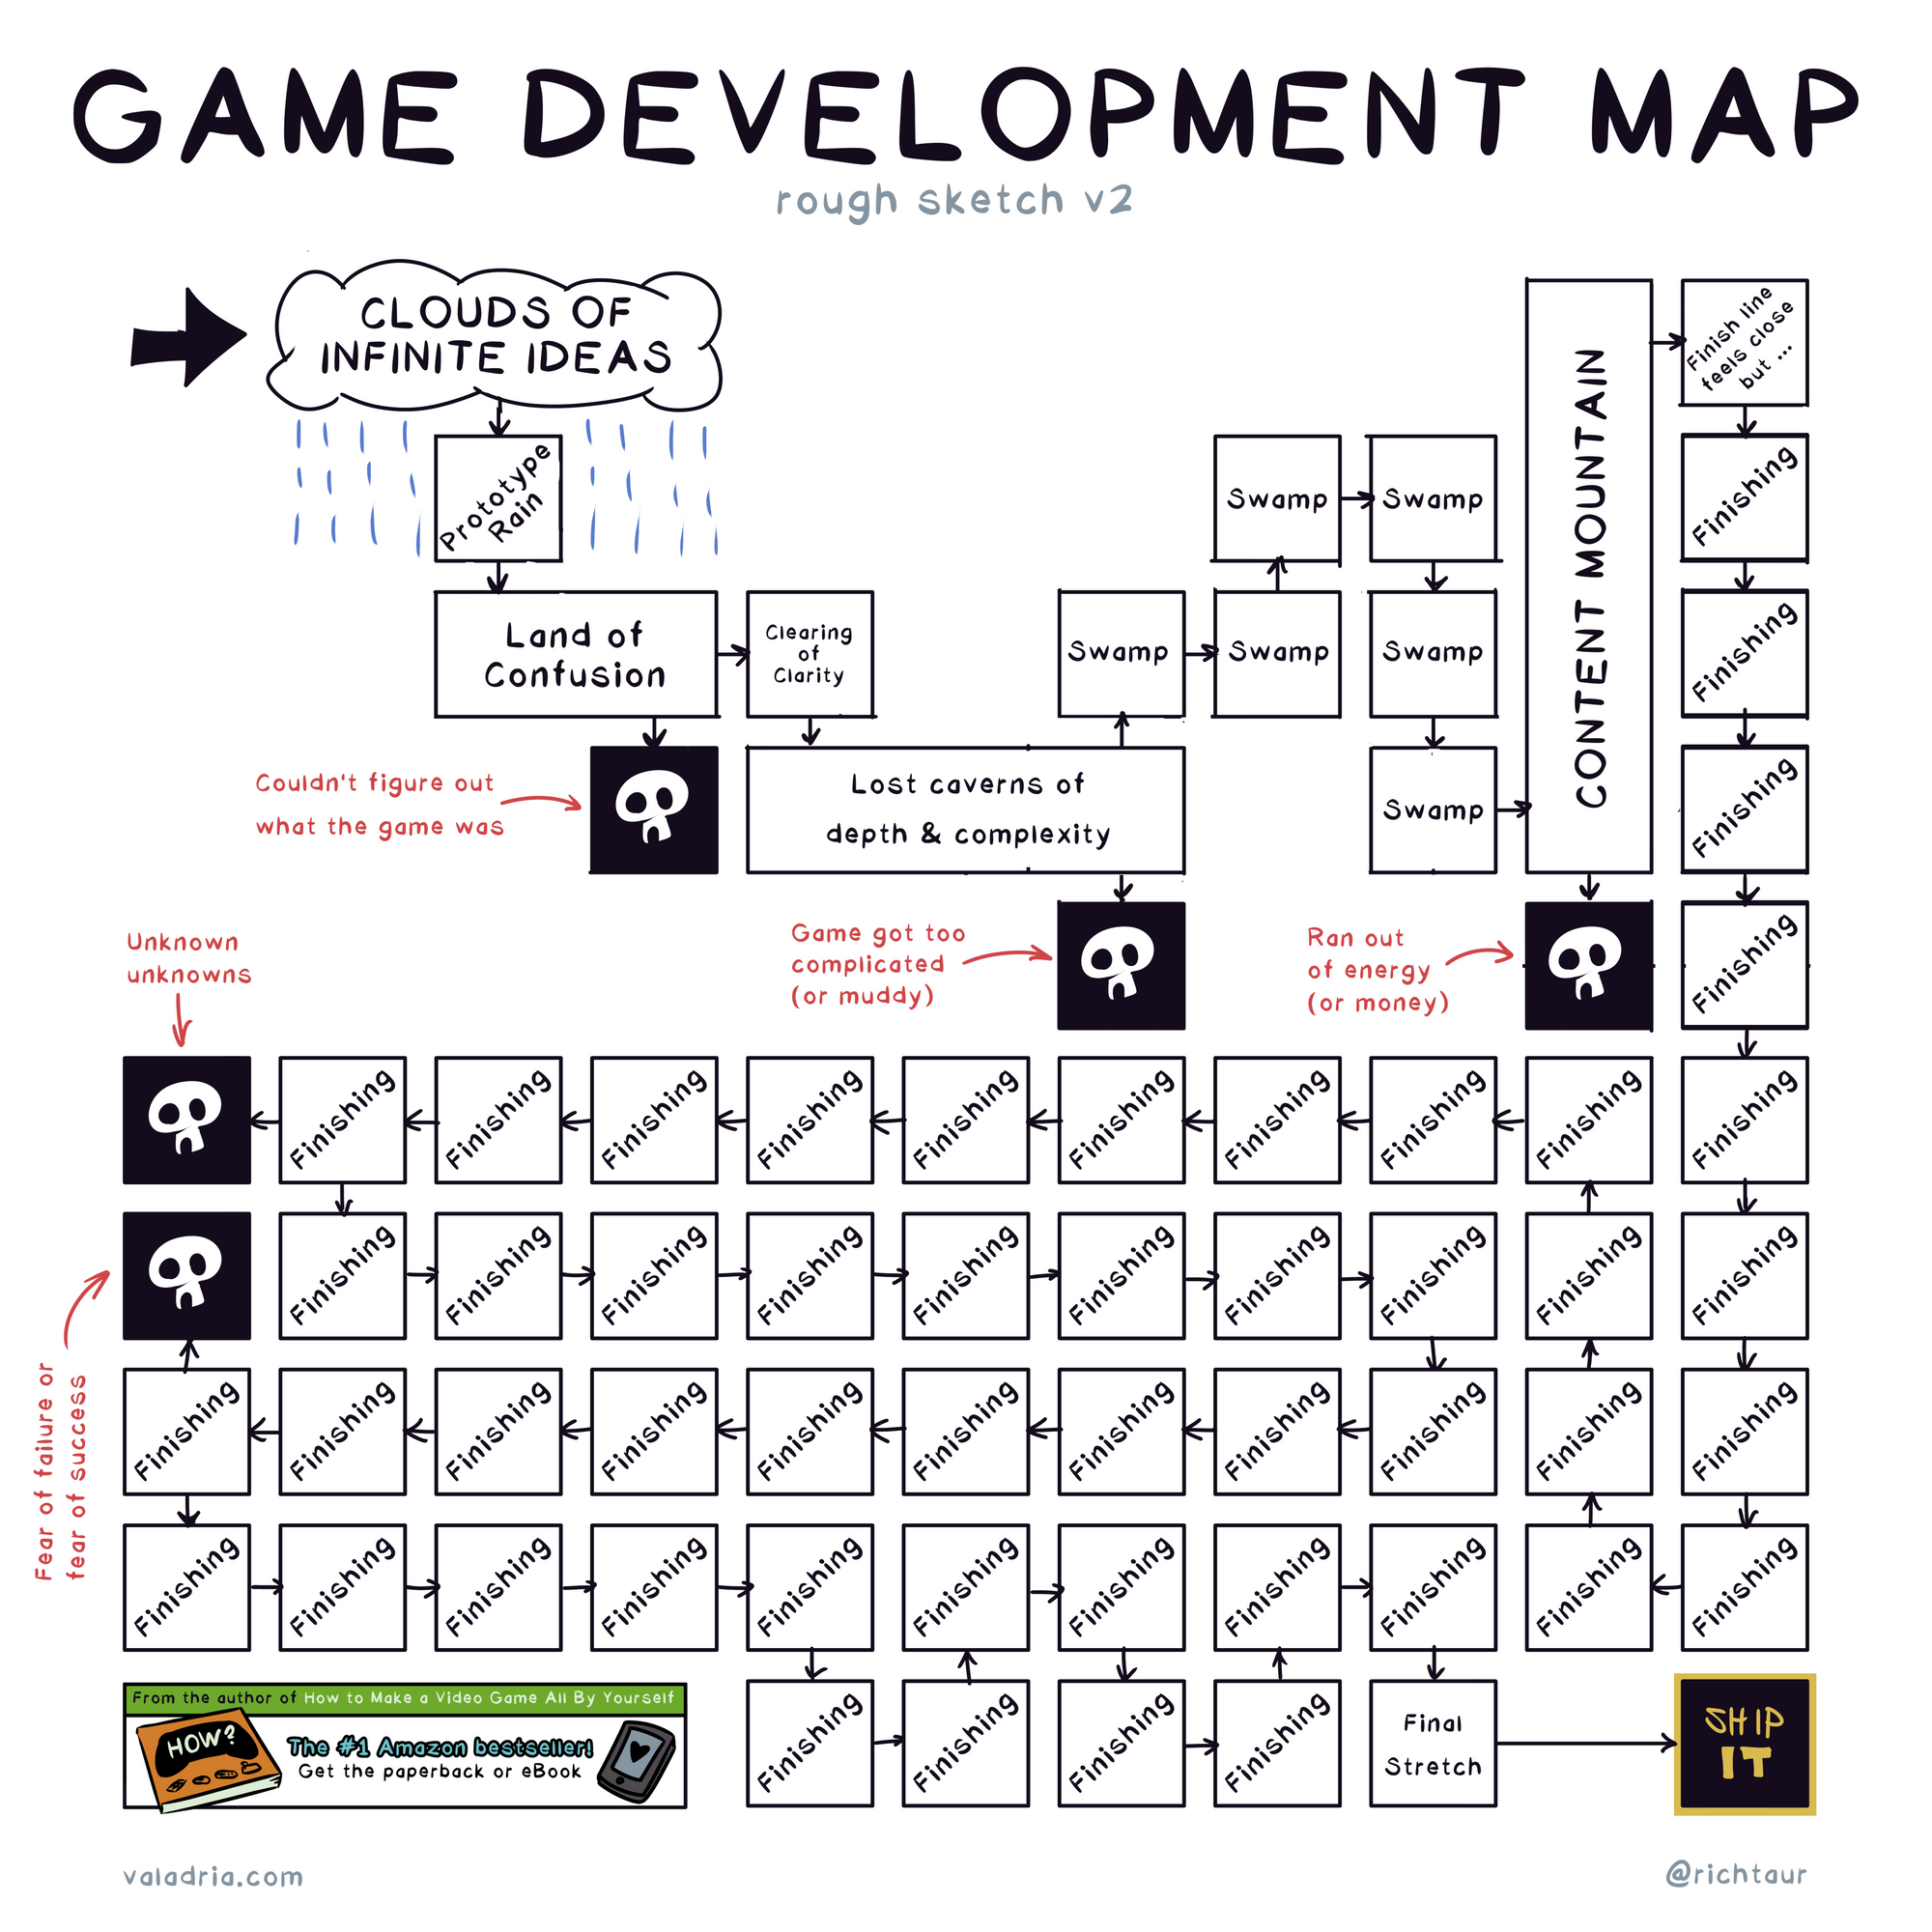 Game Dev Map rough sketch v2 by Matt Hackett